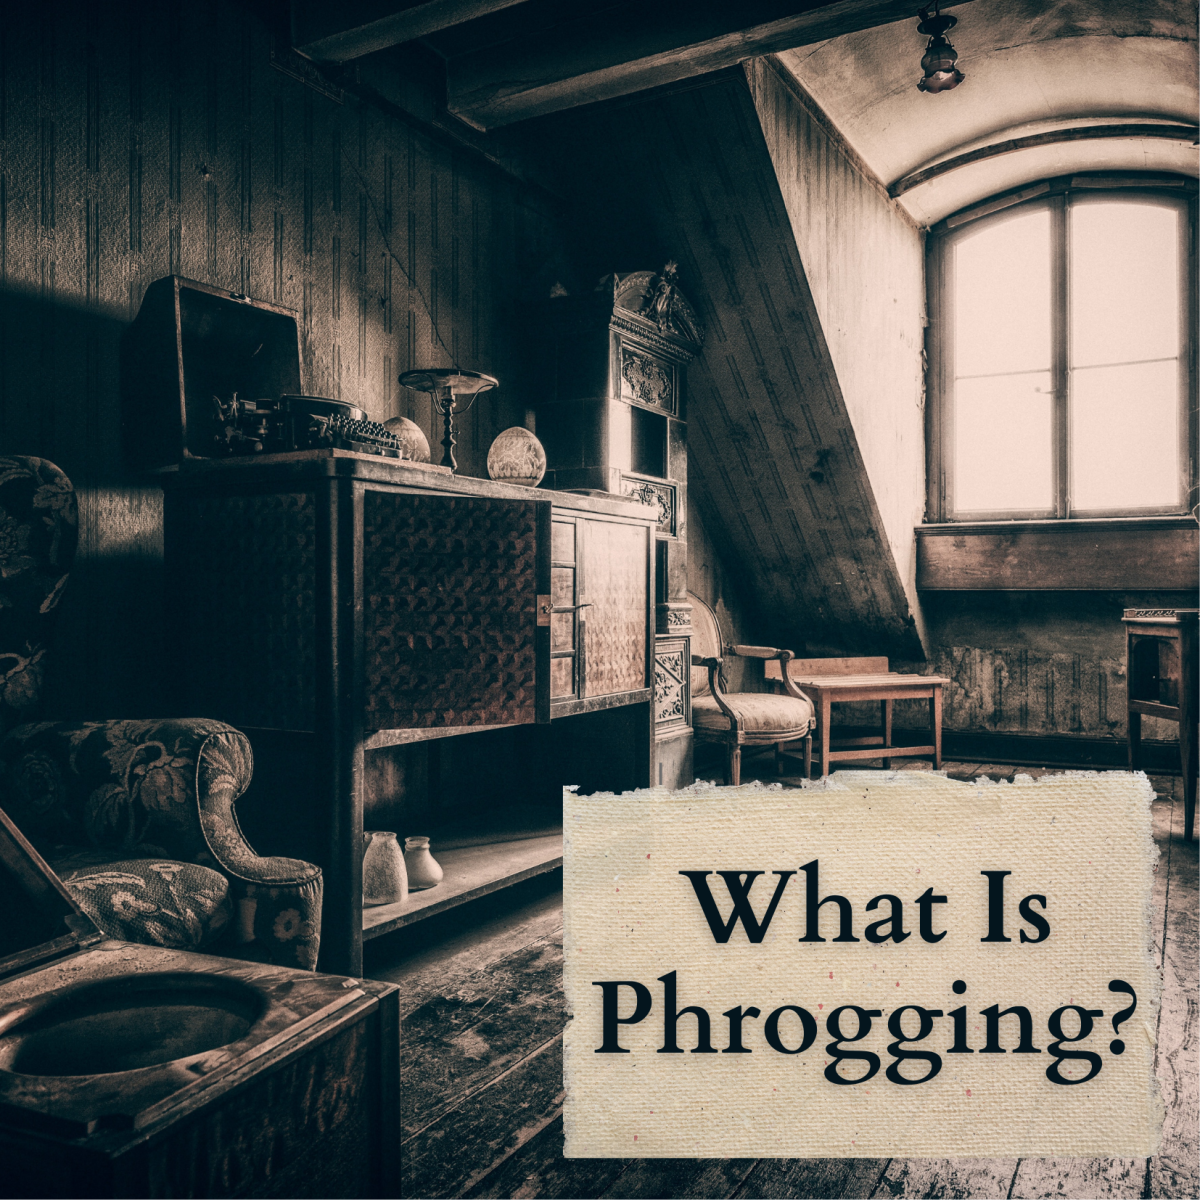 Phrogging: Real or Just an Urban Legend?